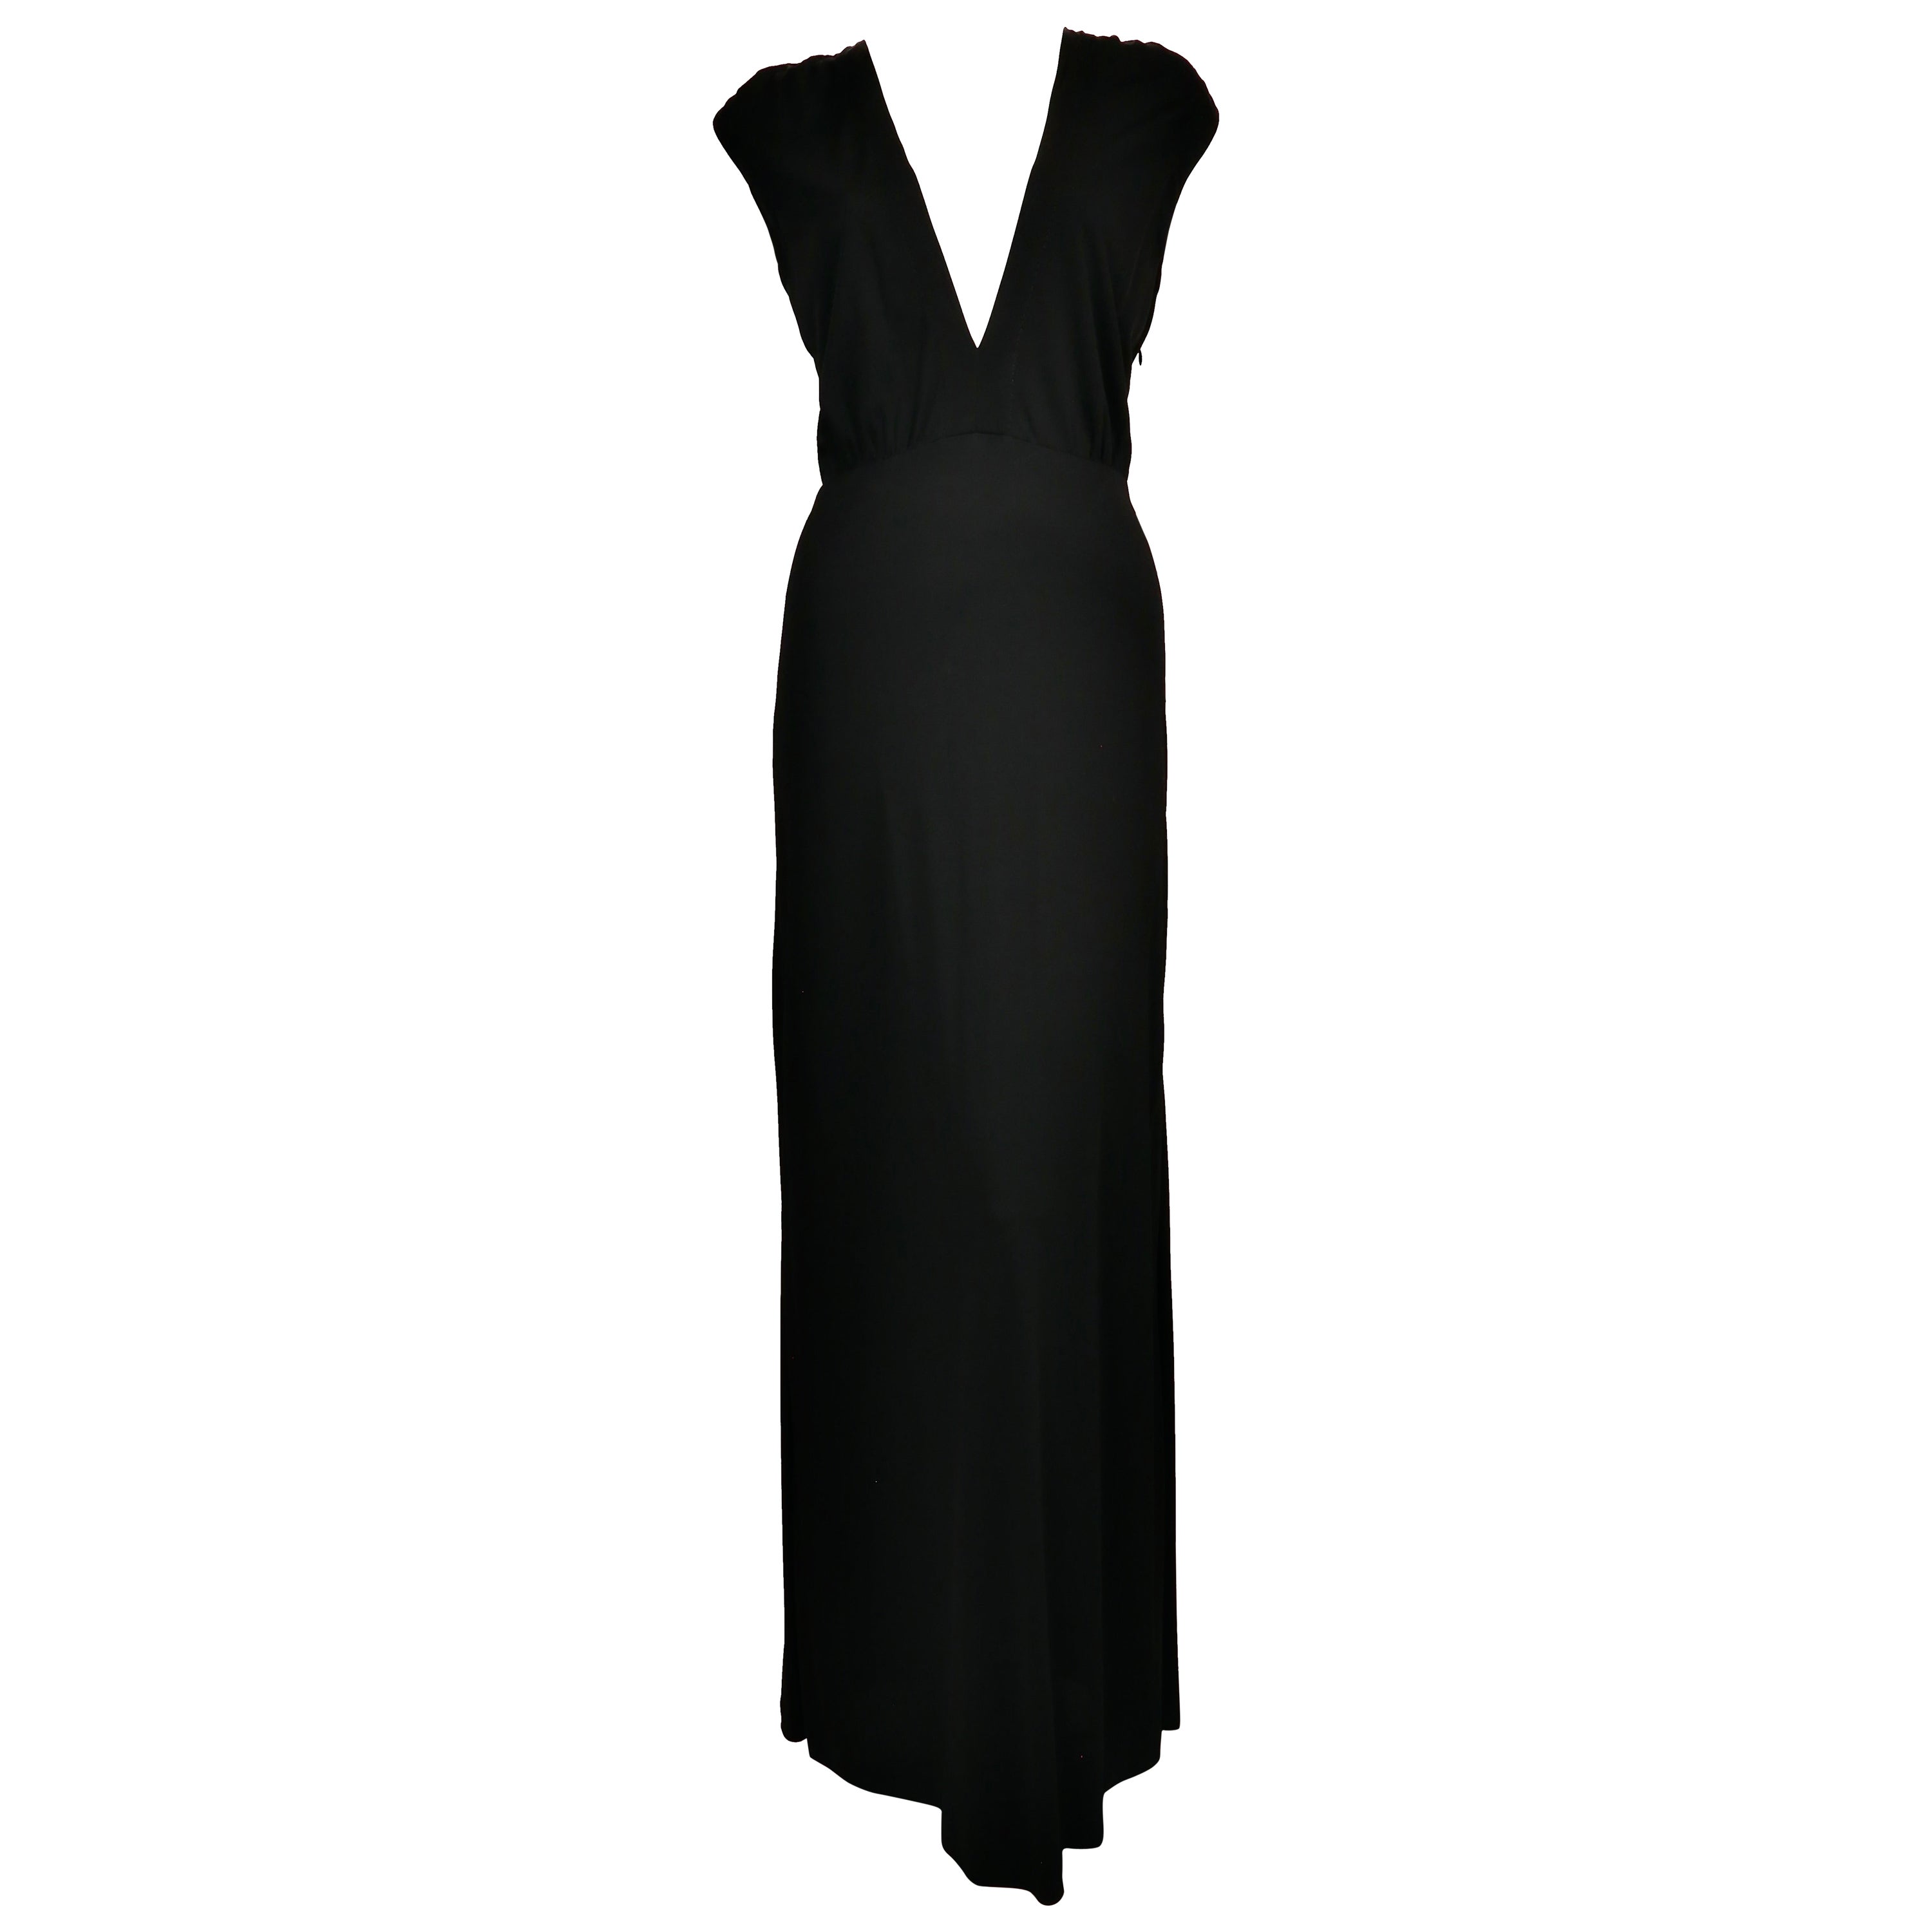 MARTIN MARGIELA RUNWAY Replica '1970's evening dress' For Sale at ...